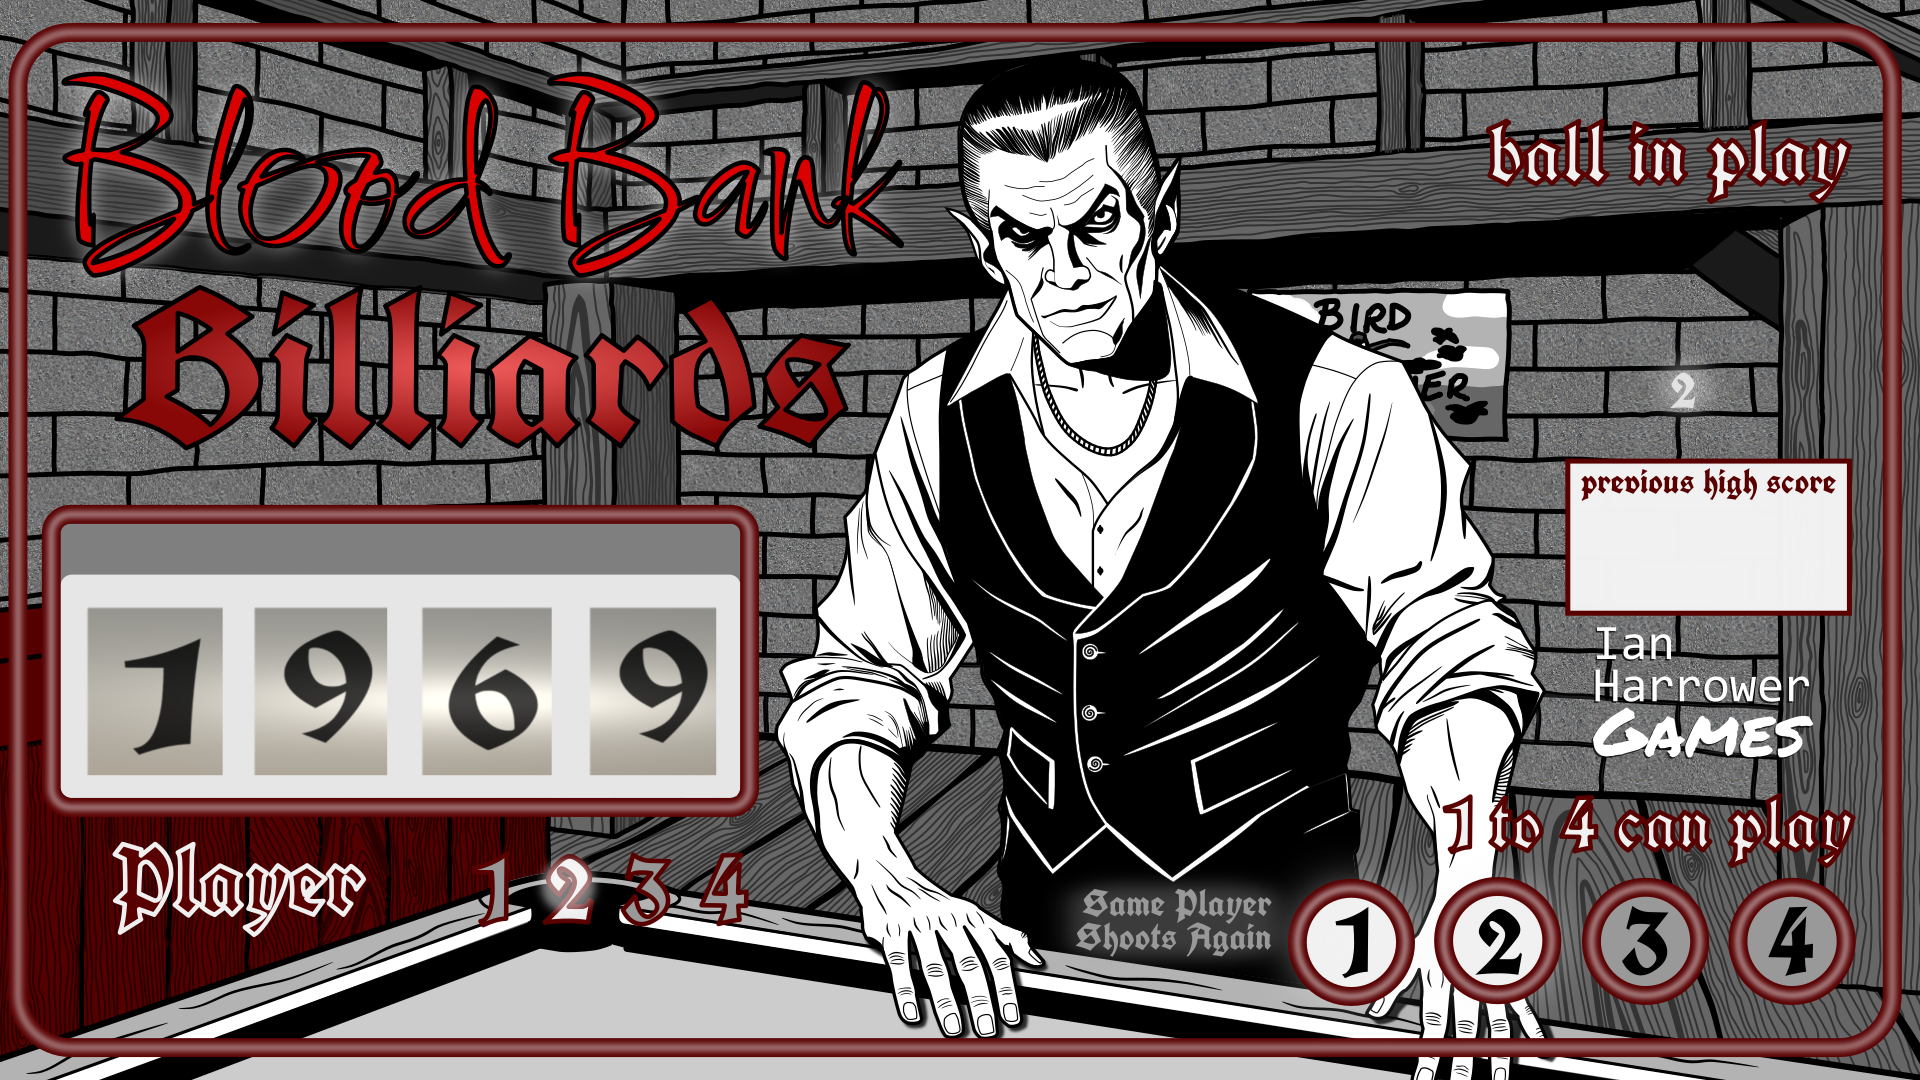 Blood Bank Billiards